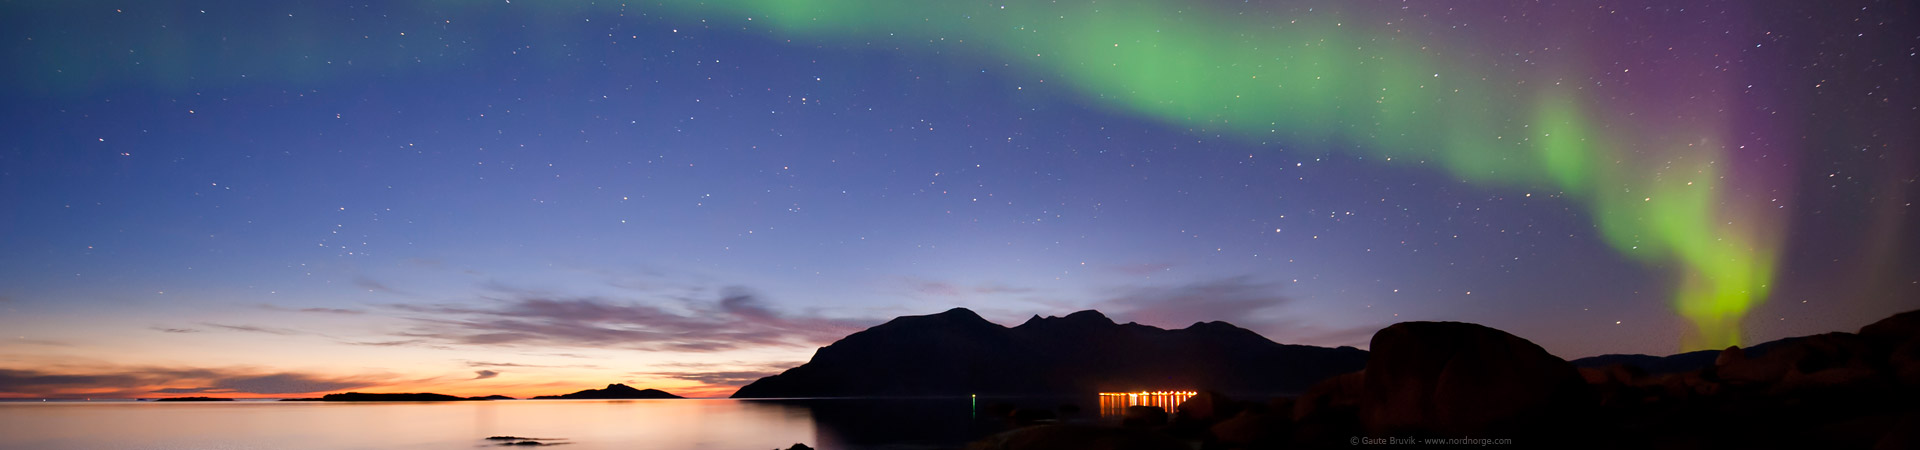 viaje a laponia auroras boreales noruega Karlsoey tromso